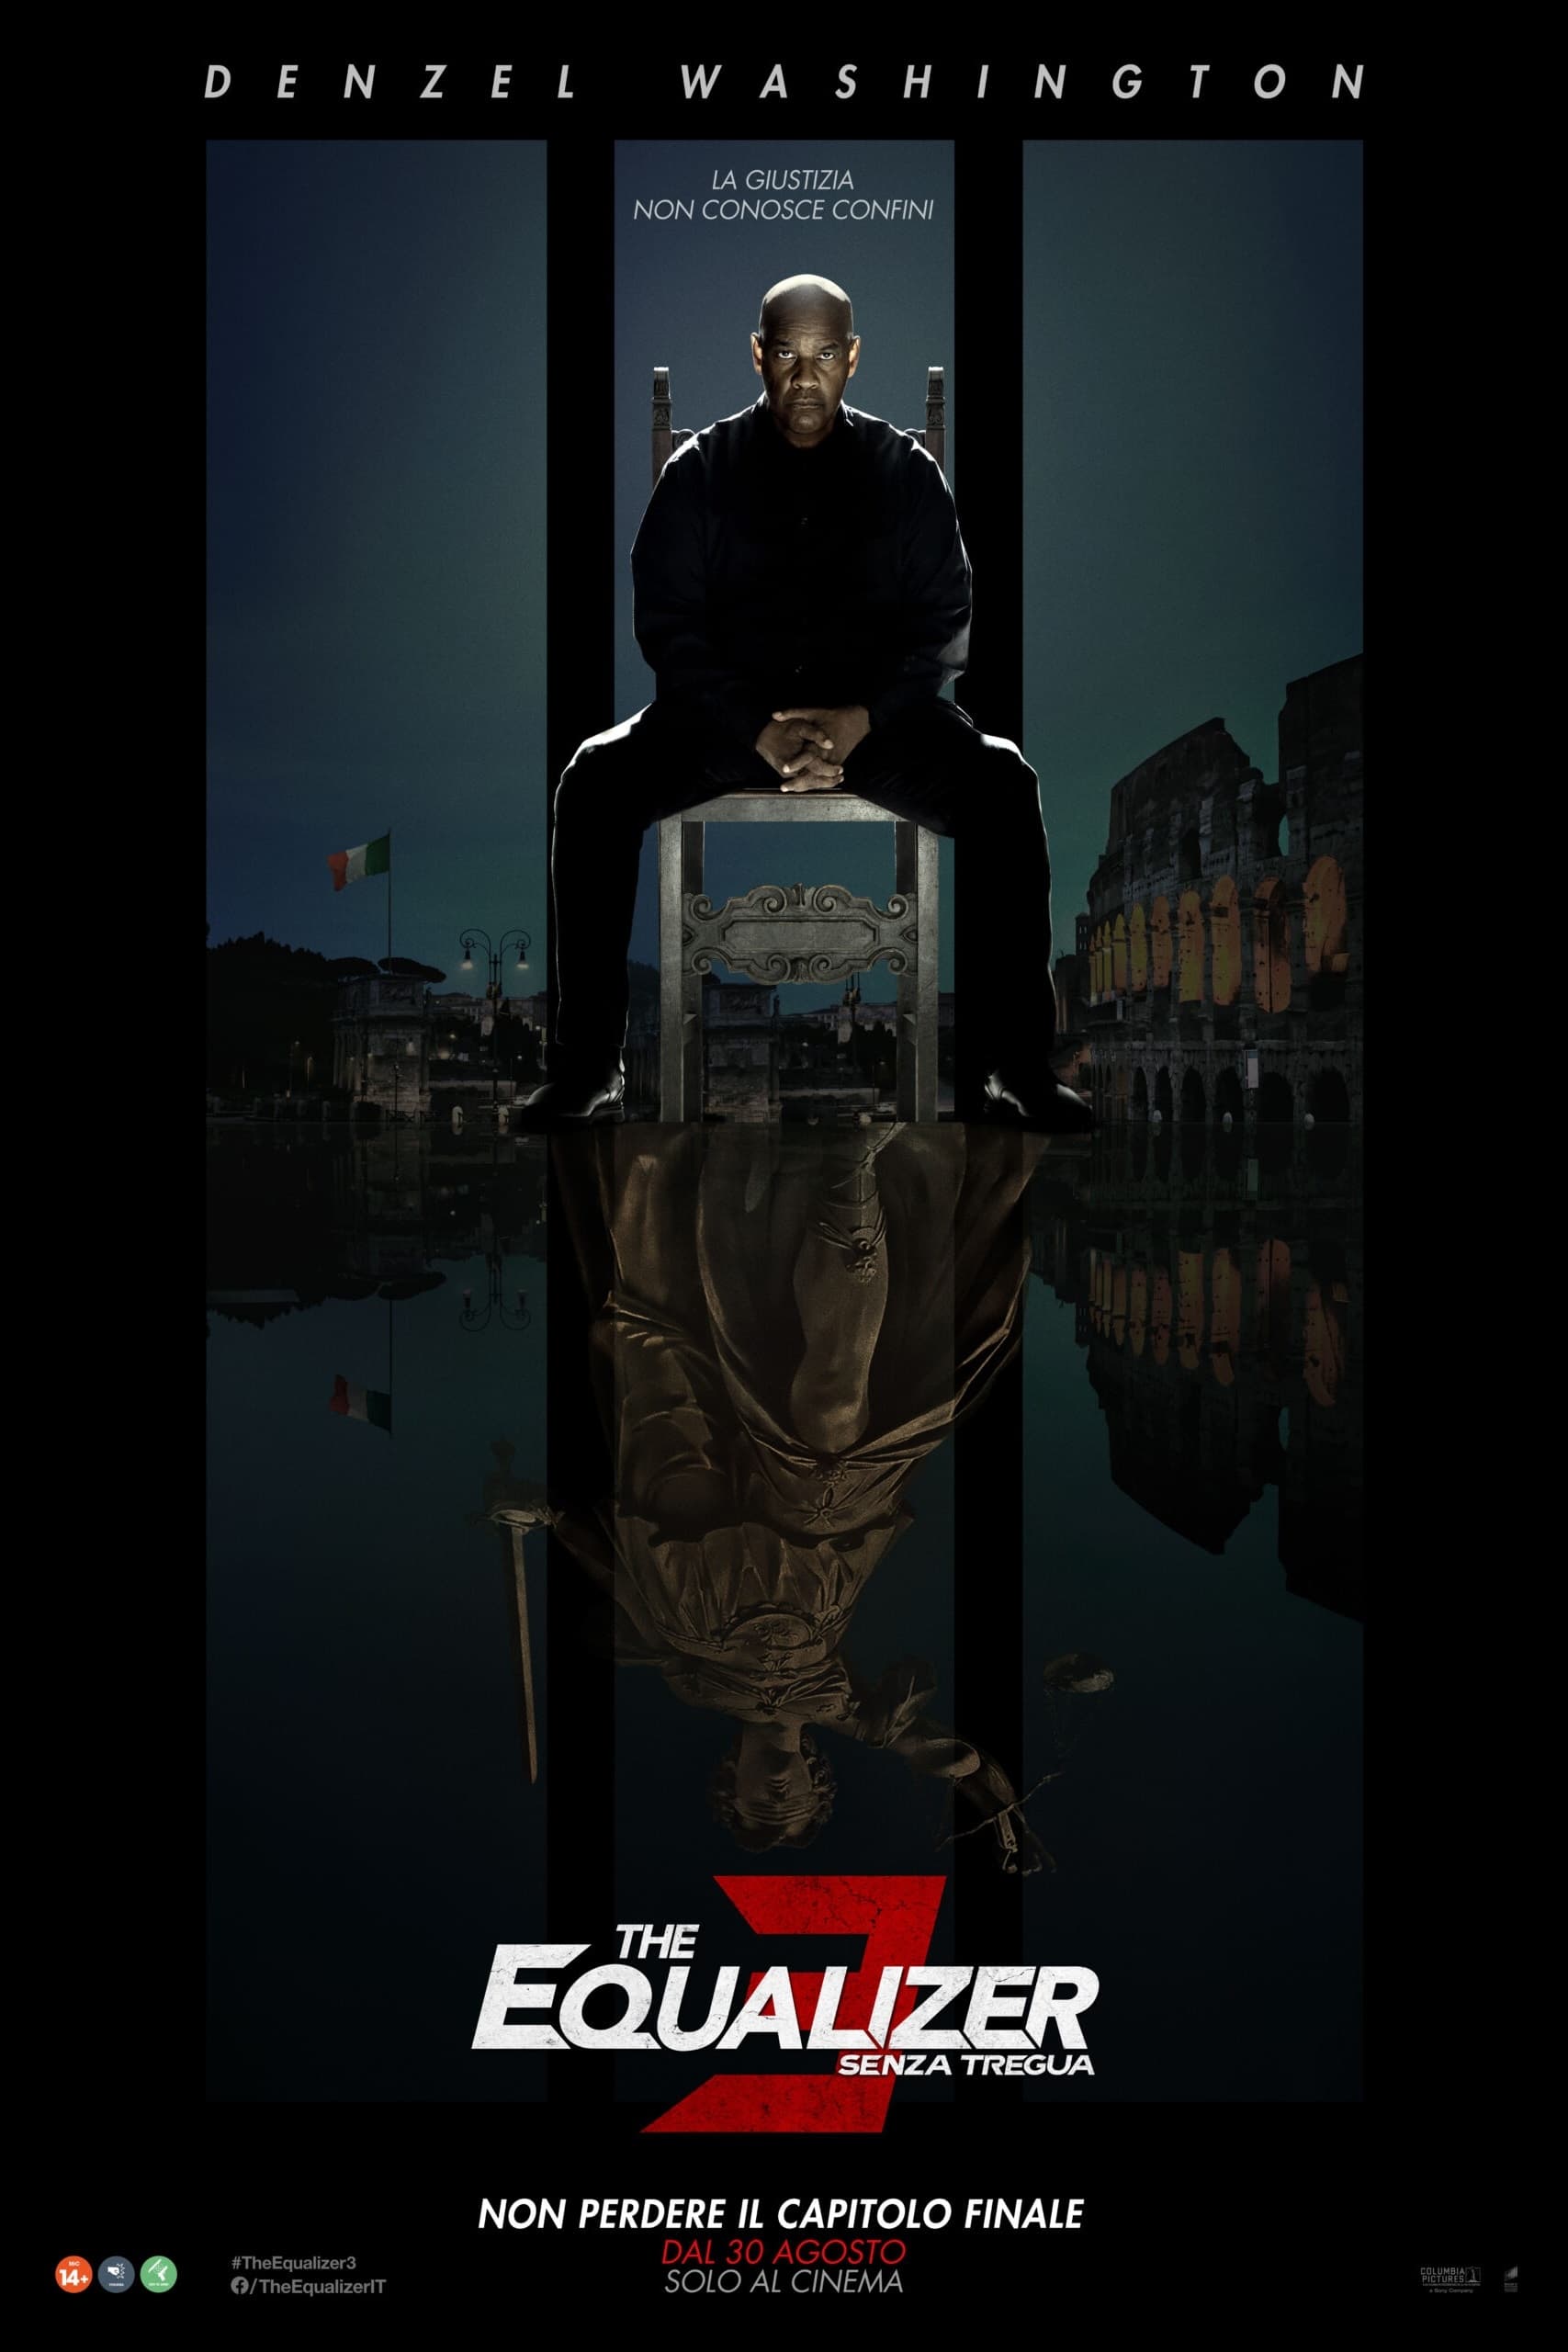 The Equalizer 3 - Senza tregua film